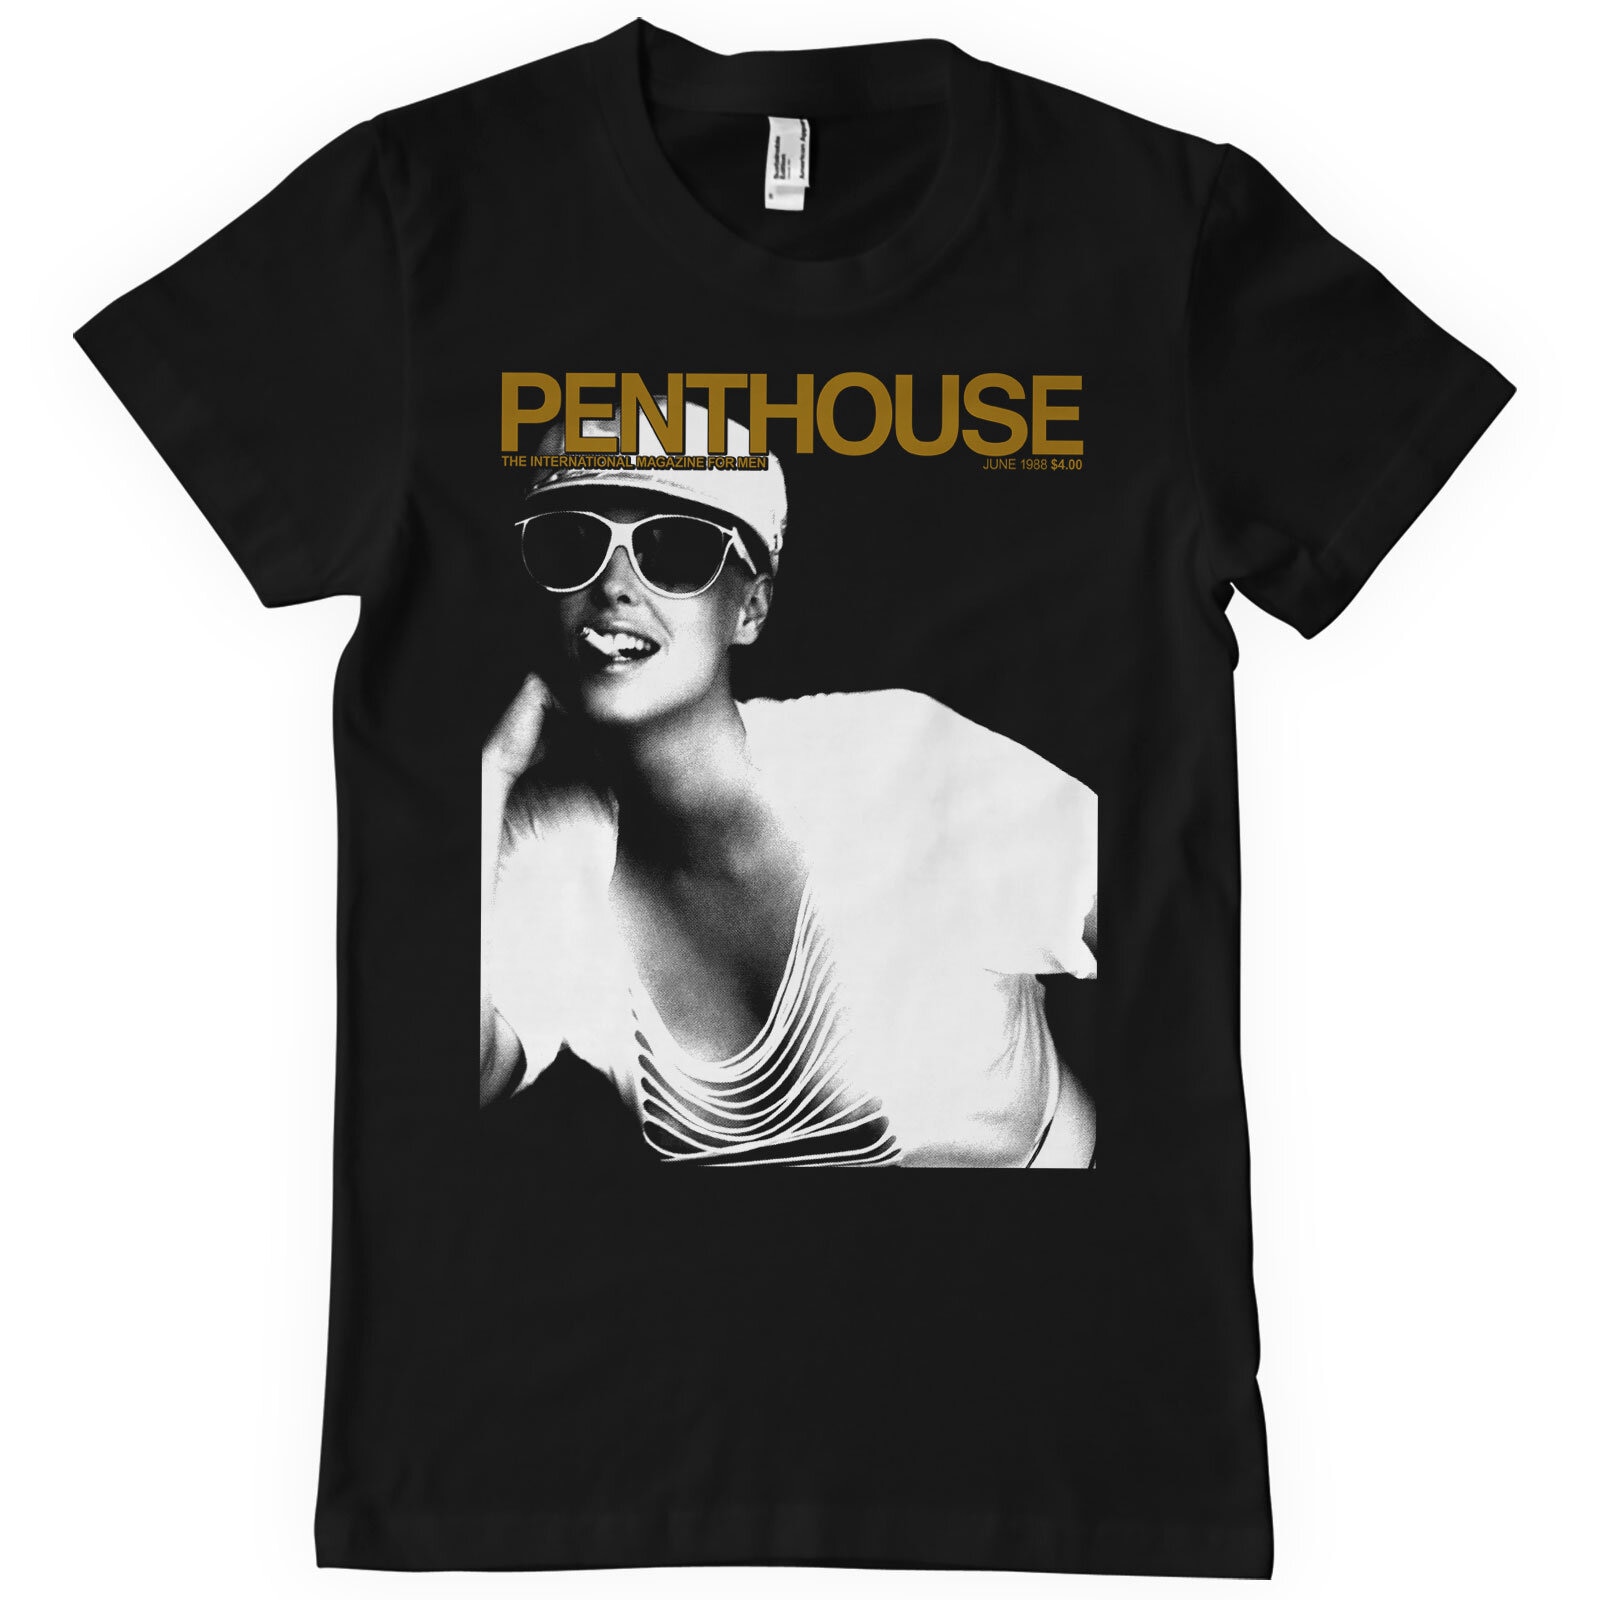 Penthouse June 1988 Cover T-Shirt